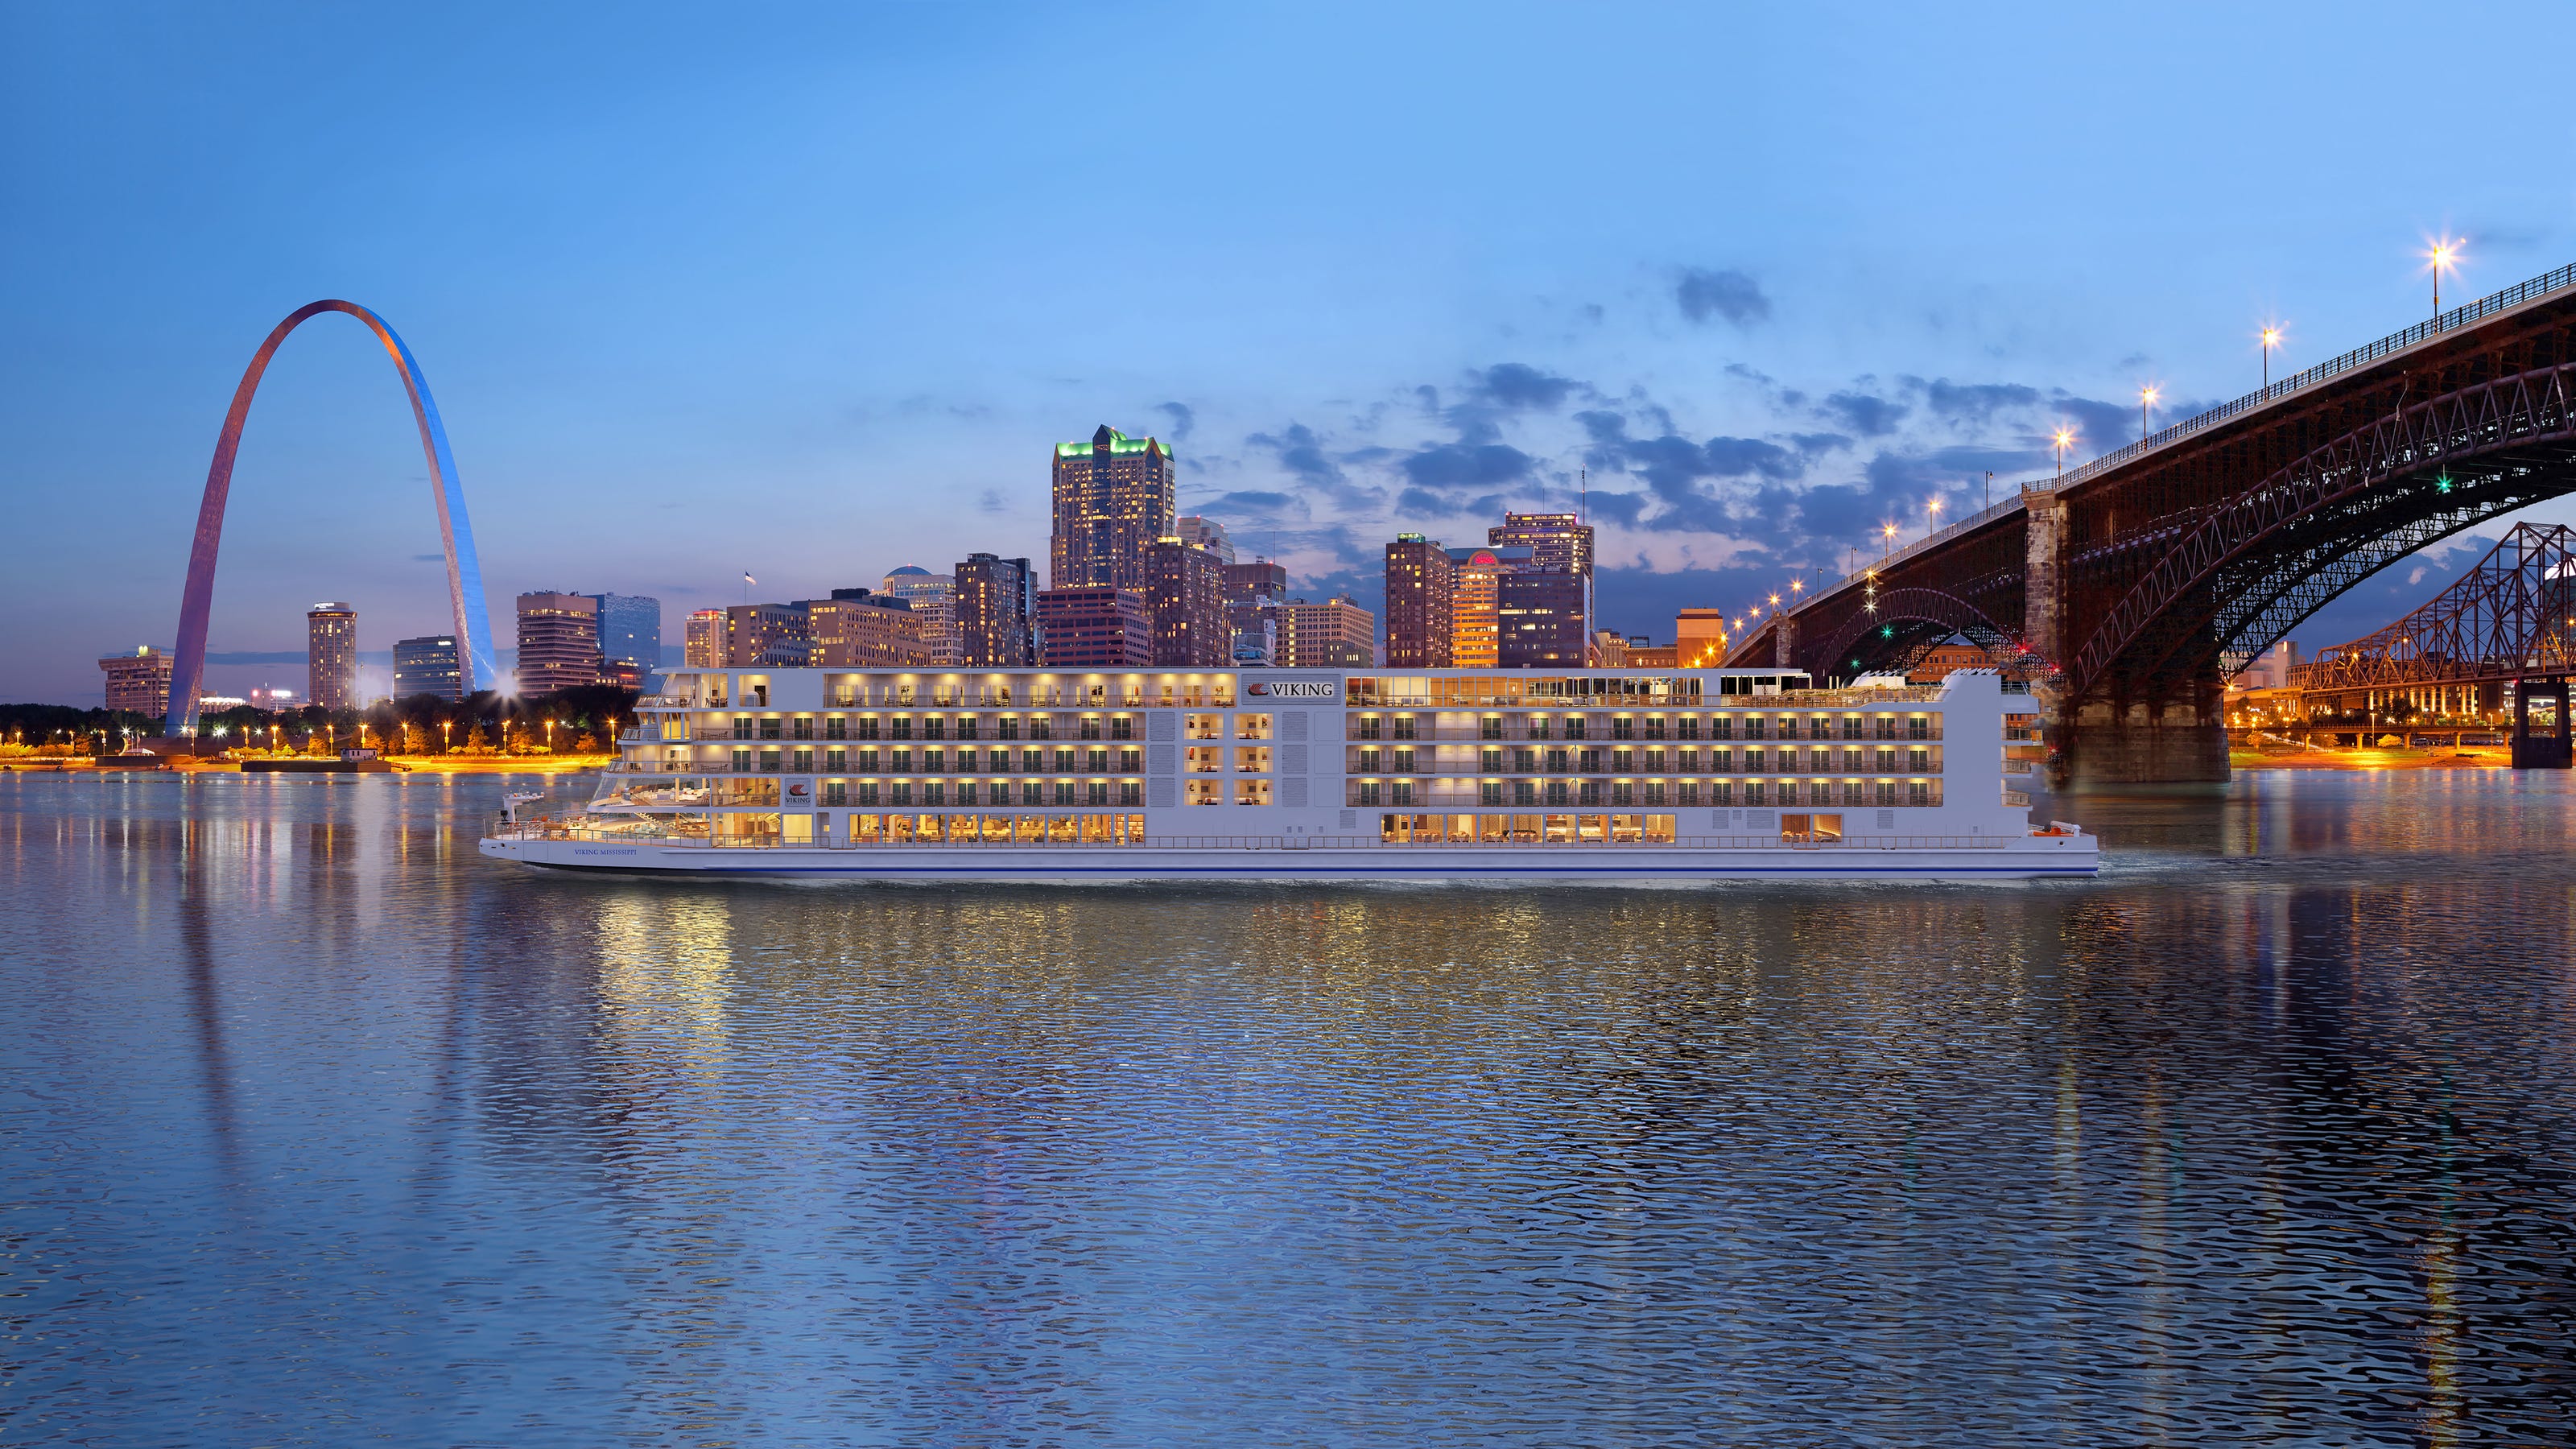 viking river cruises corporate headquarters